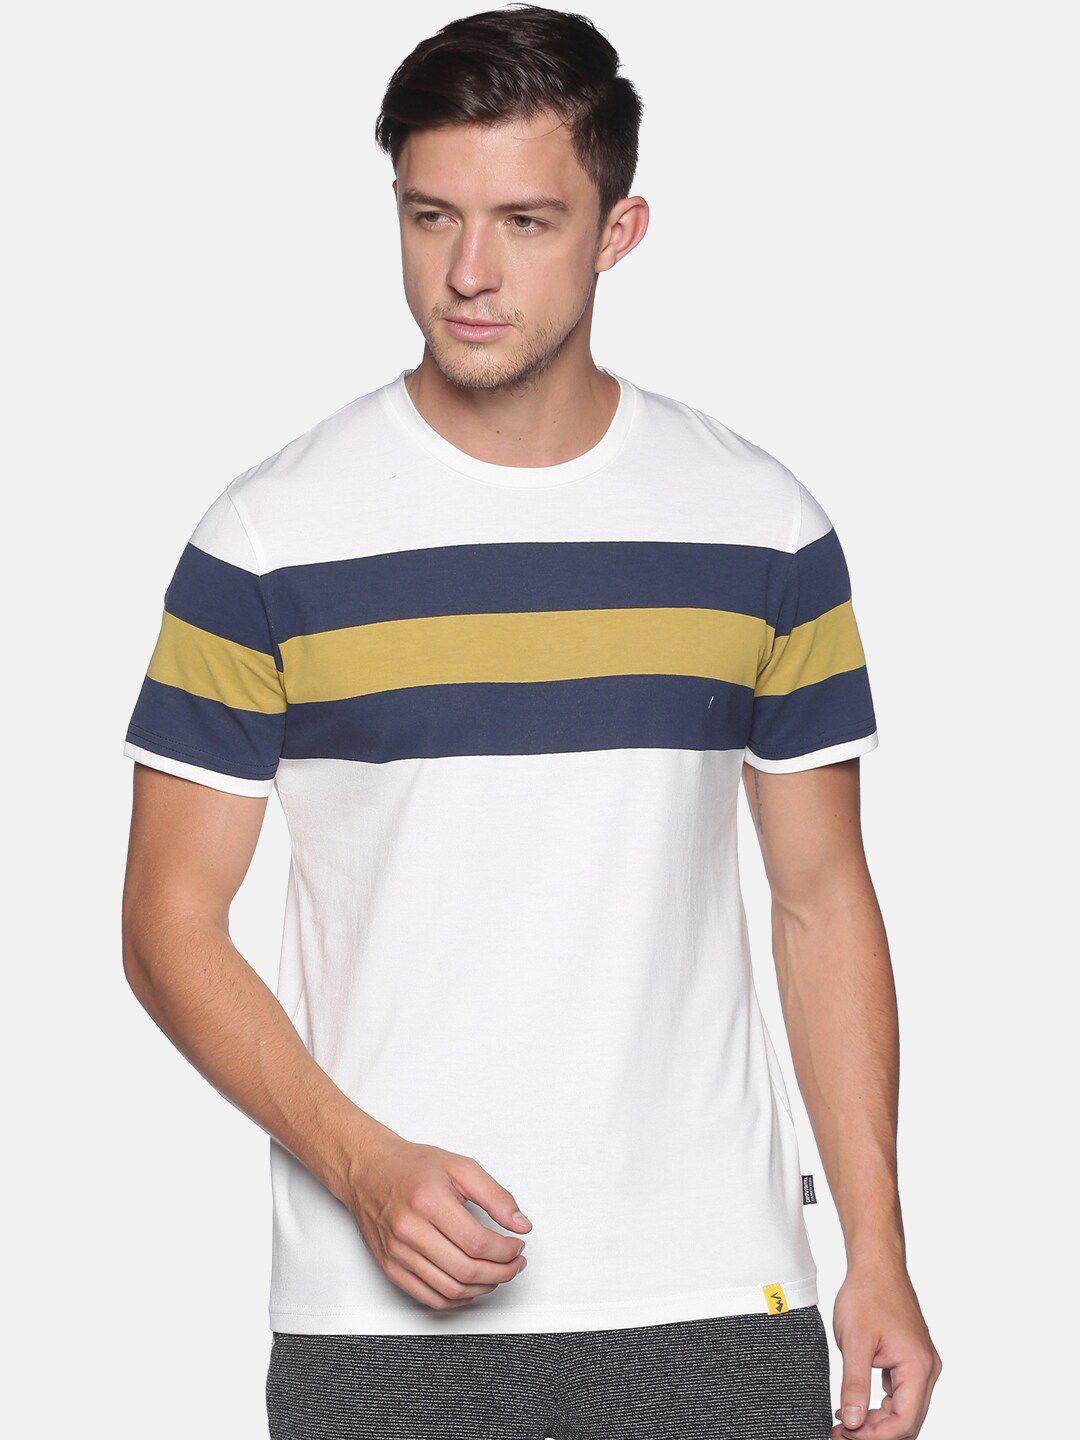 campus-sutra-men-white-striped-t-shirt